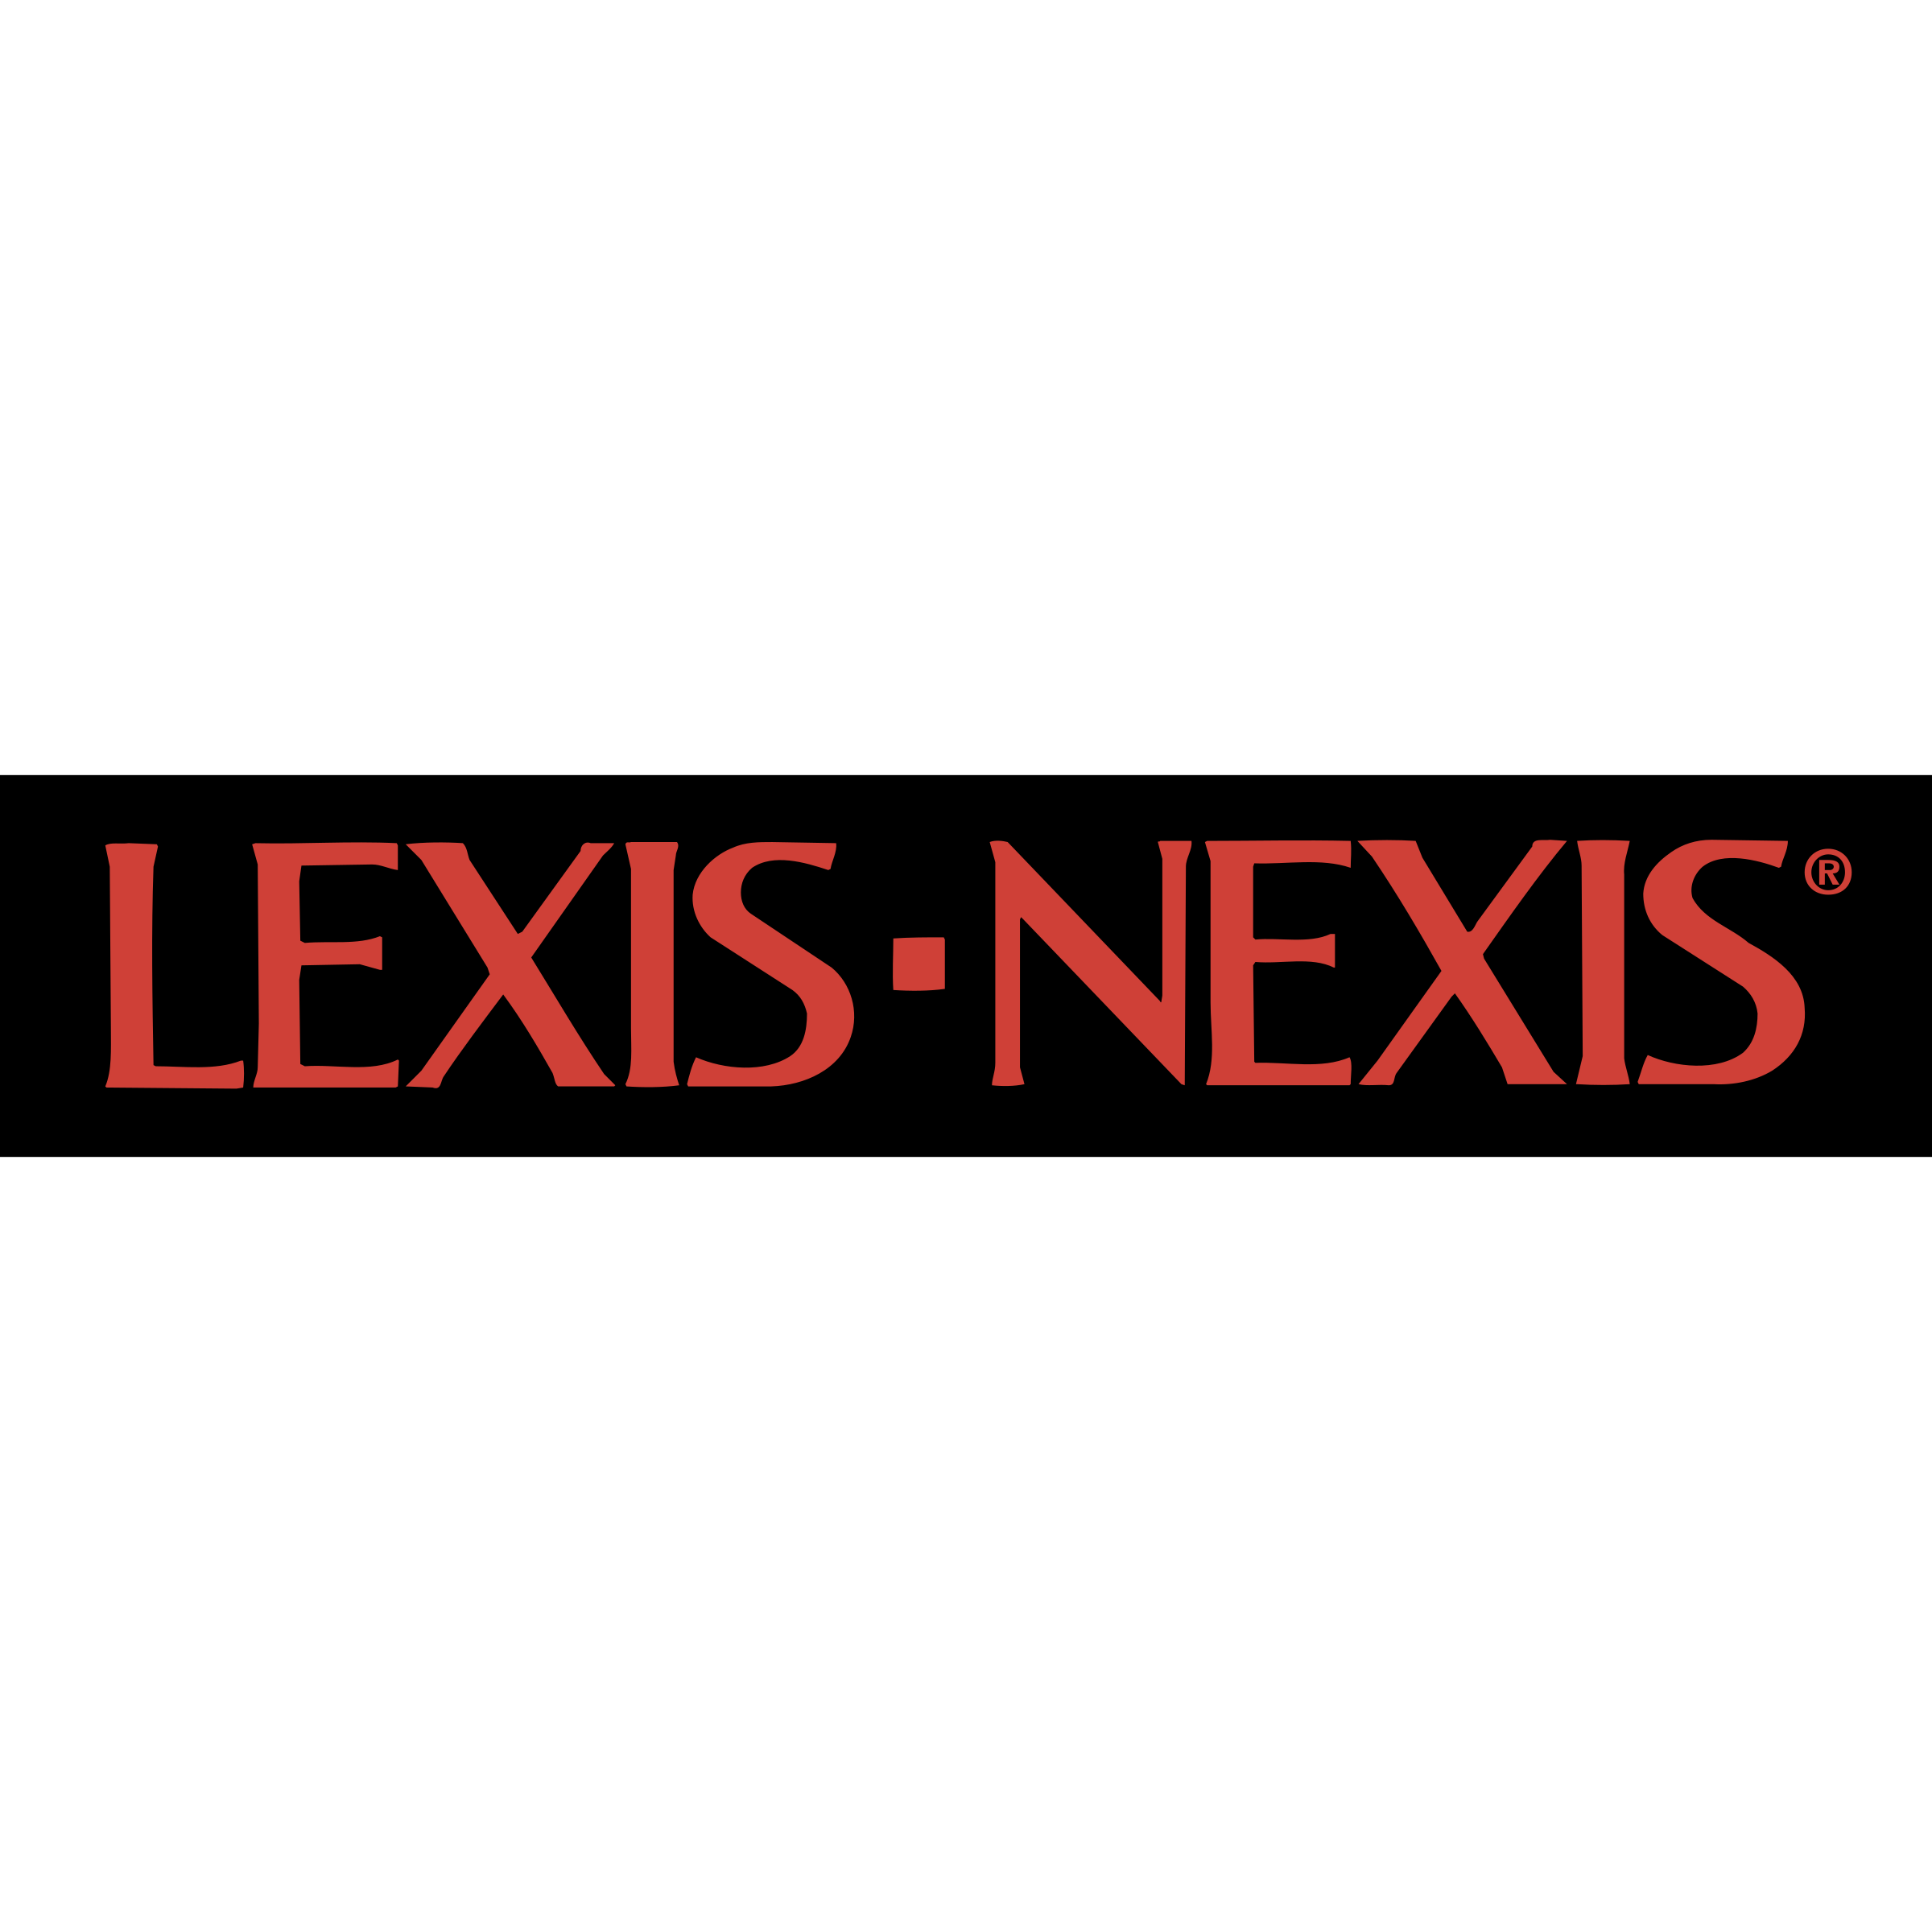 Lexis Logo - Lexis Nexis Logo PNG Transparent & SVG Vector - Freebie Supply